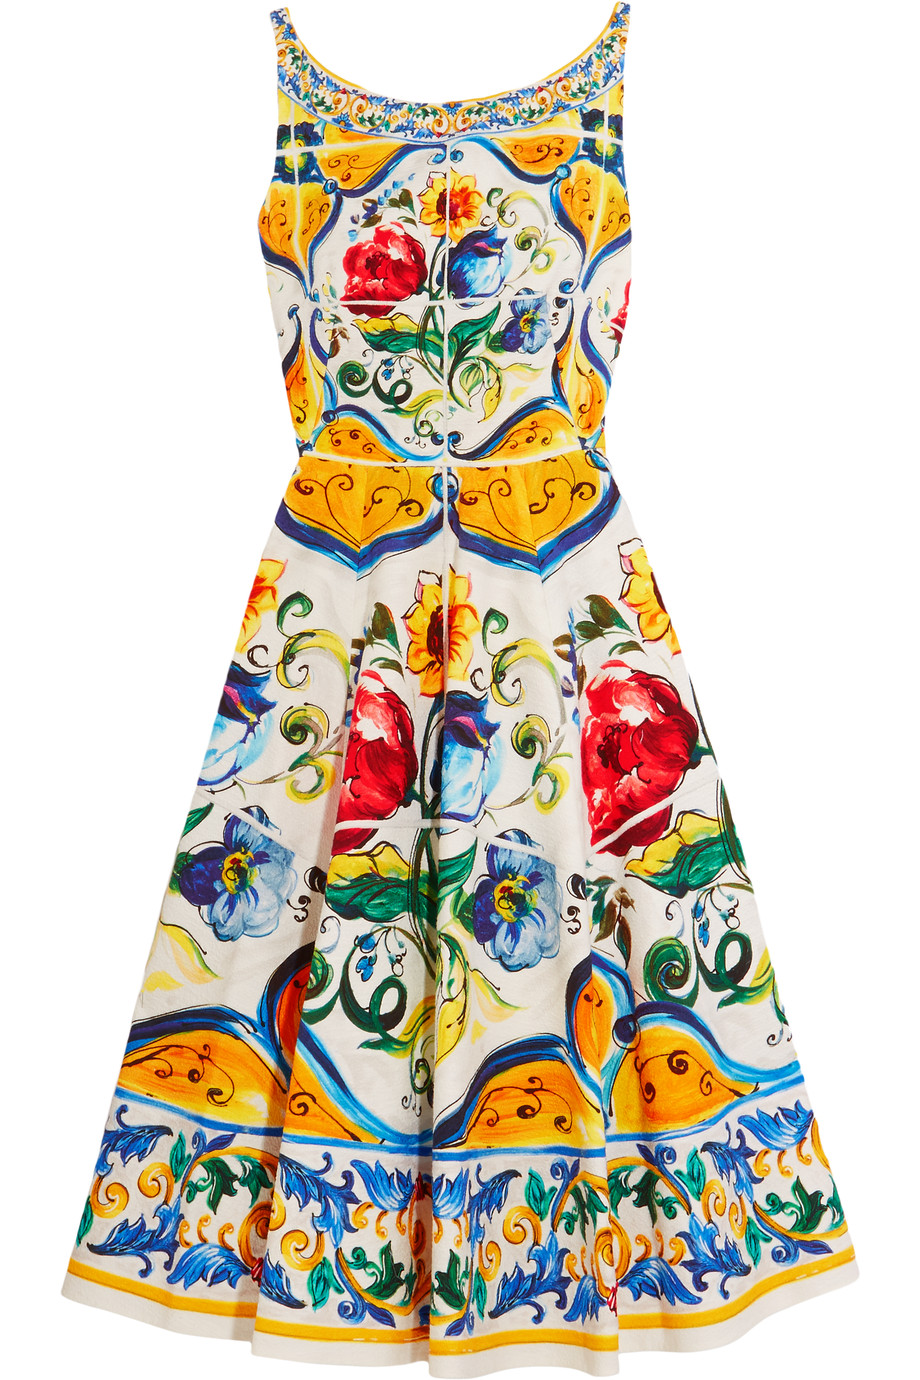 dolce and gabbana printed dress